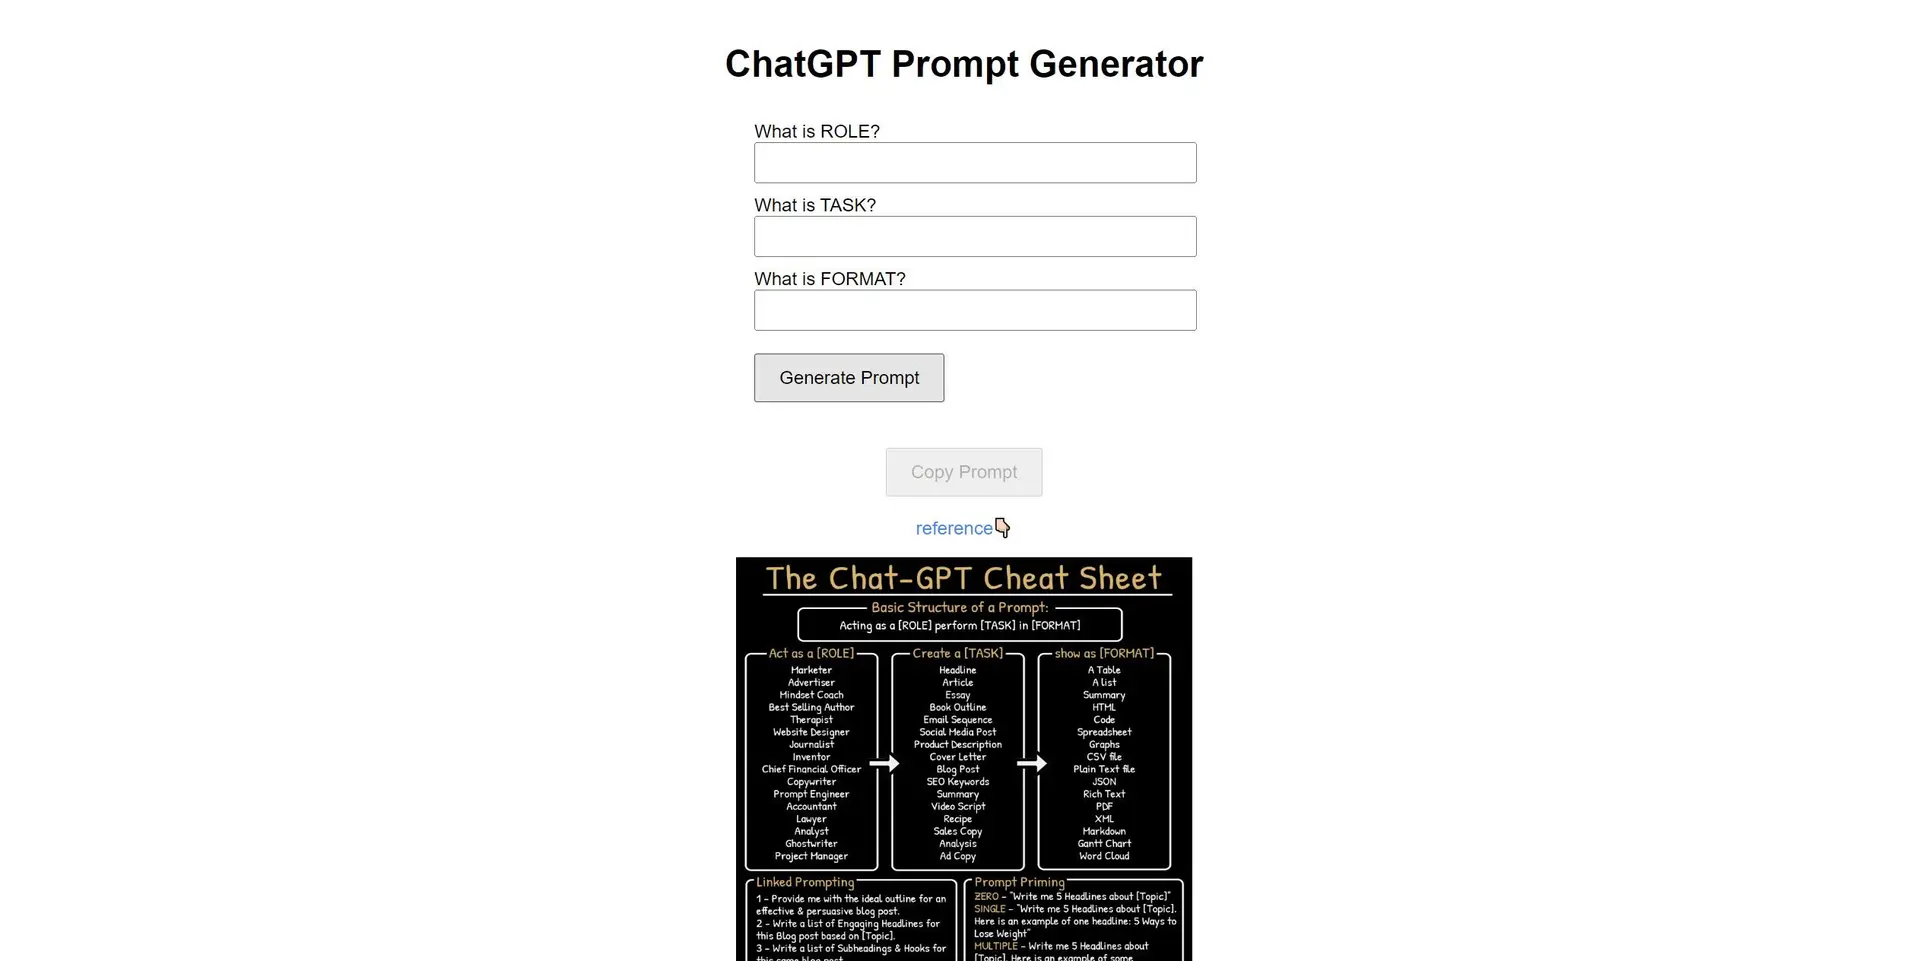 ChatGPT Prompt Generatorwebsite picture